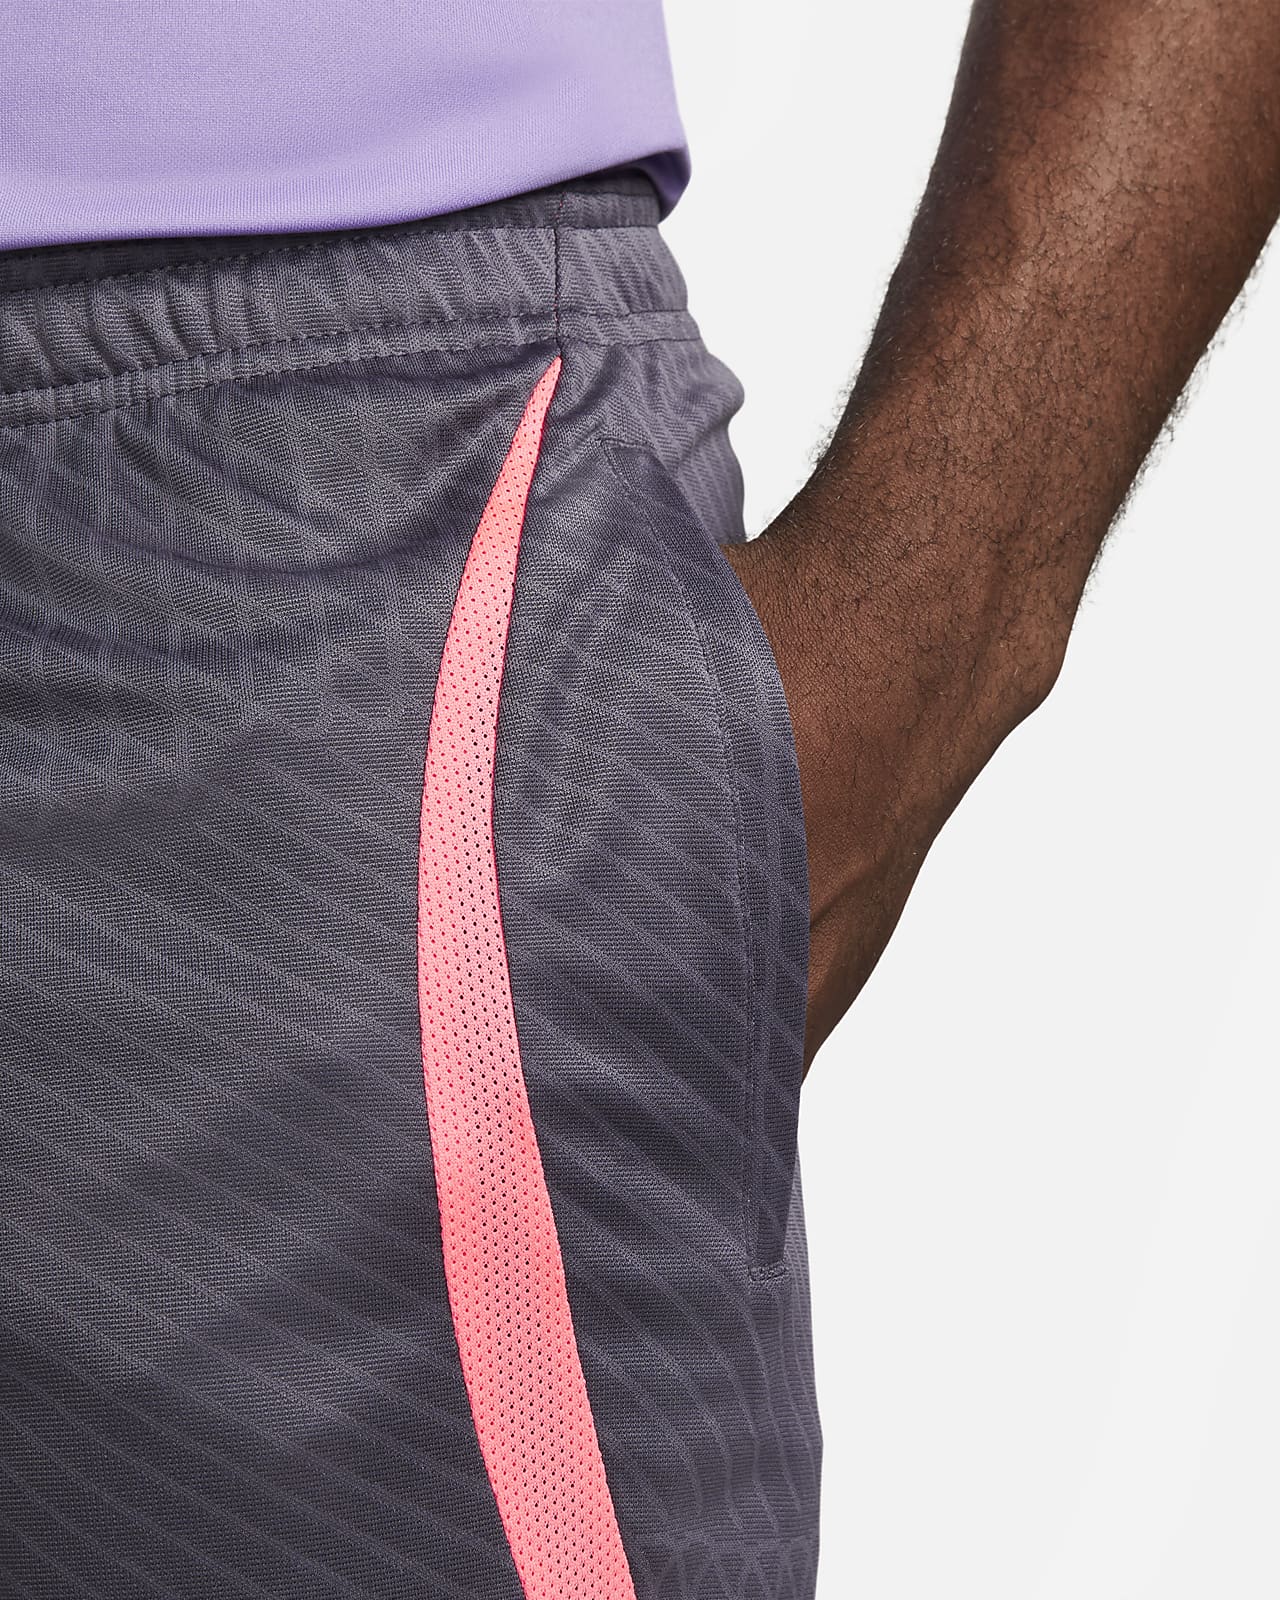 Nike Dri FIT Strike 23 Knit Shorts — KitKing